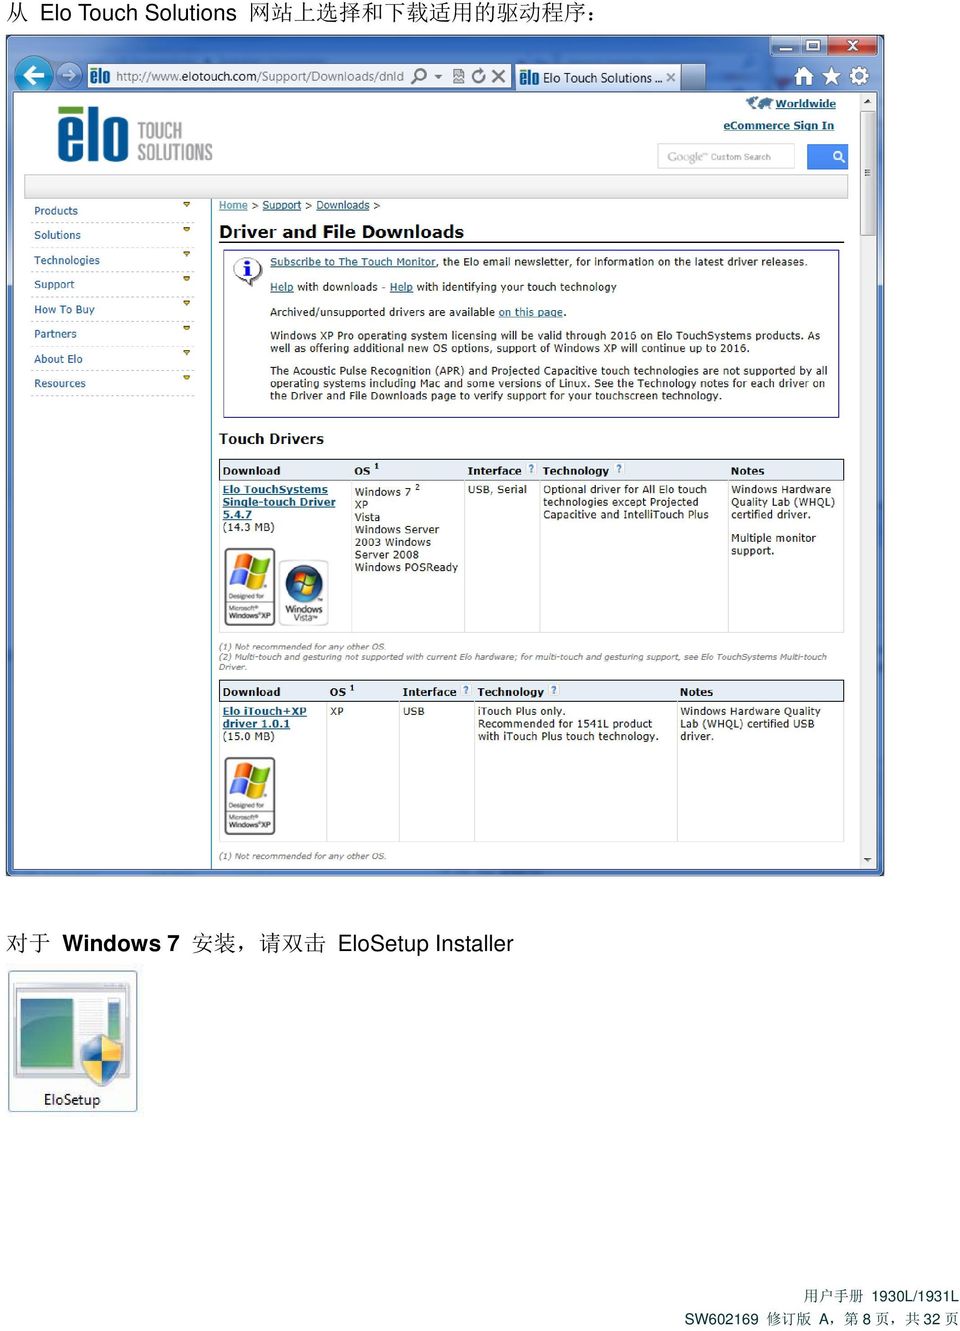 Windows 7 安 装, 请 双 击 EloSetup